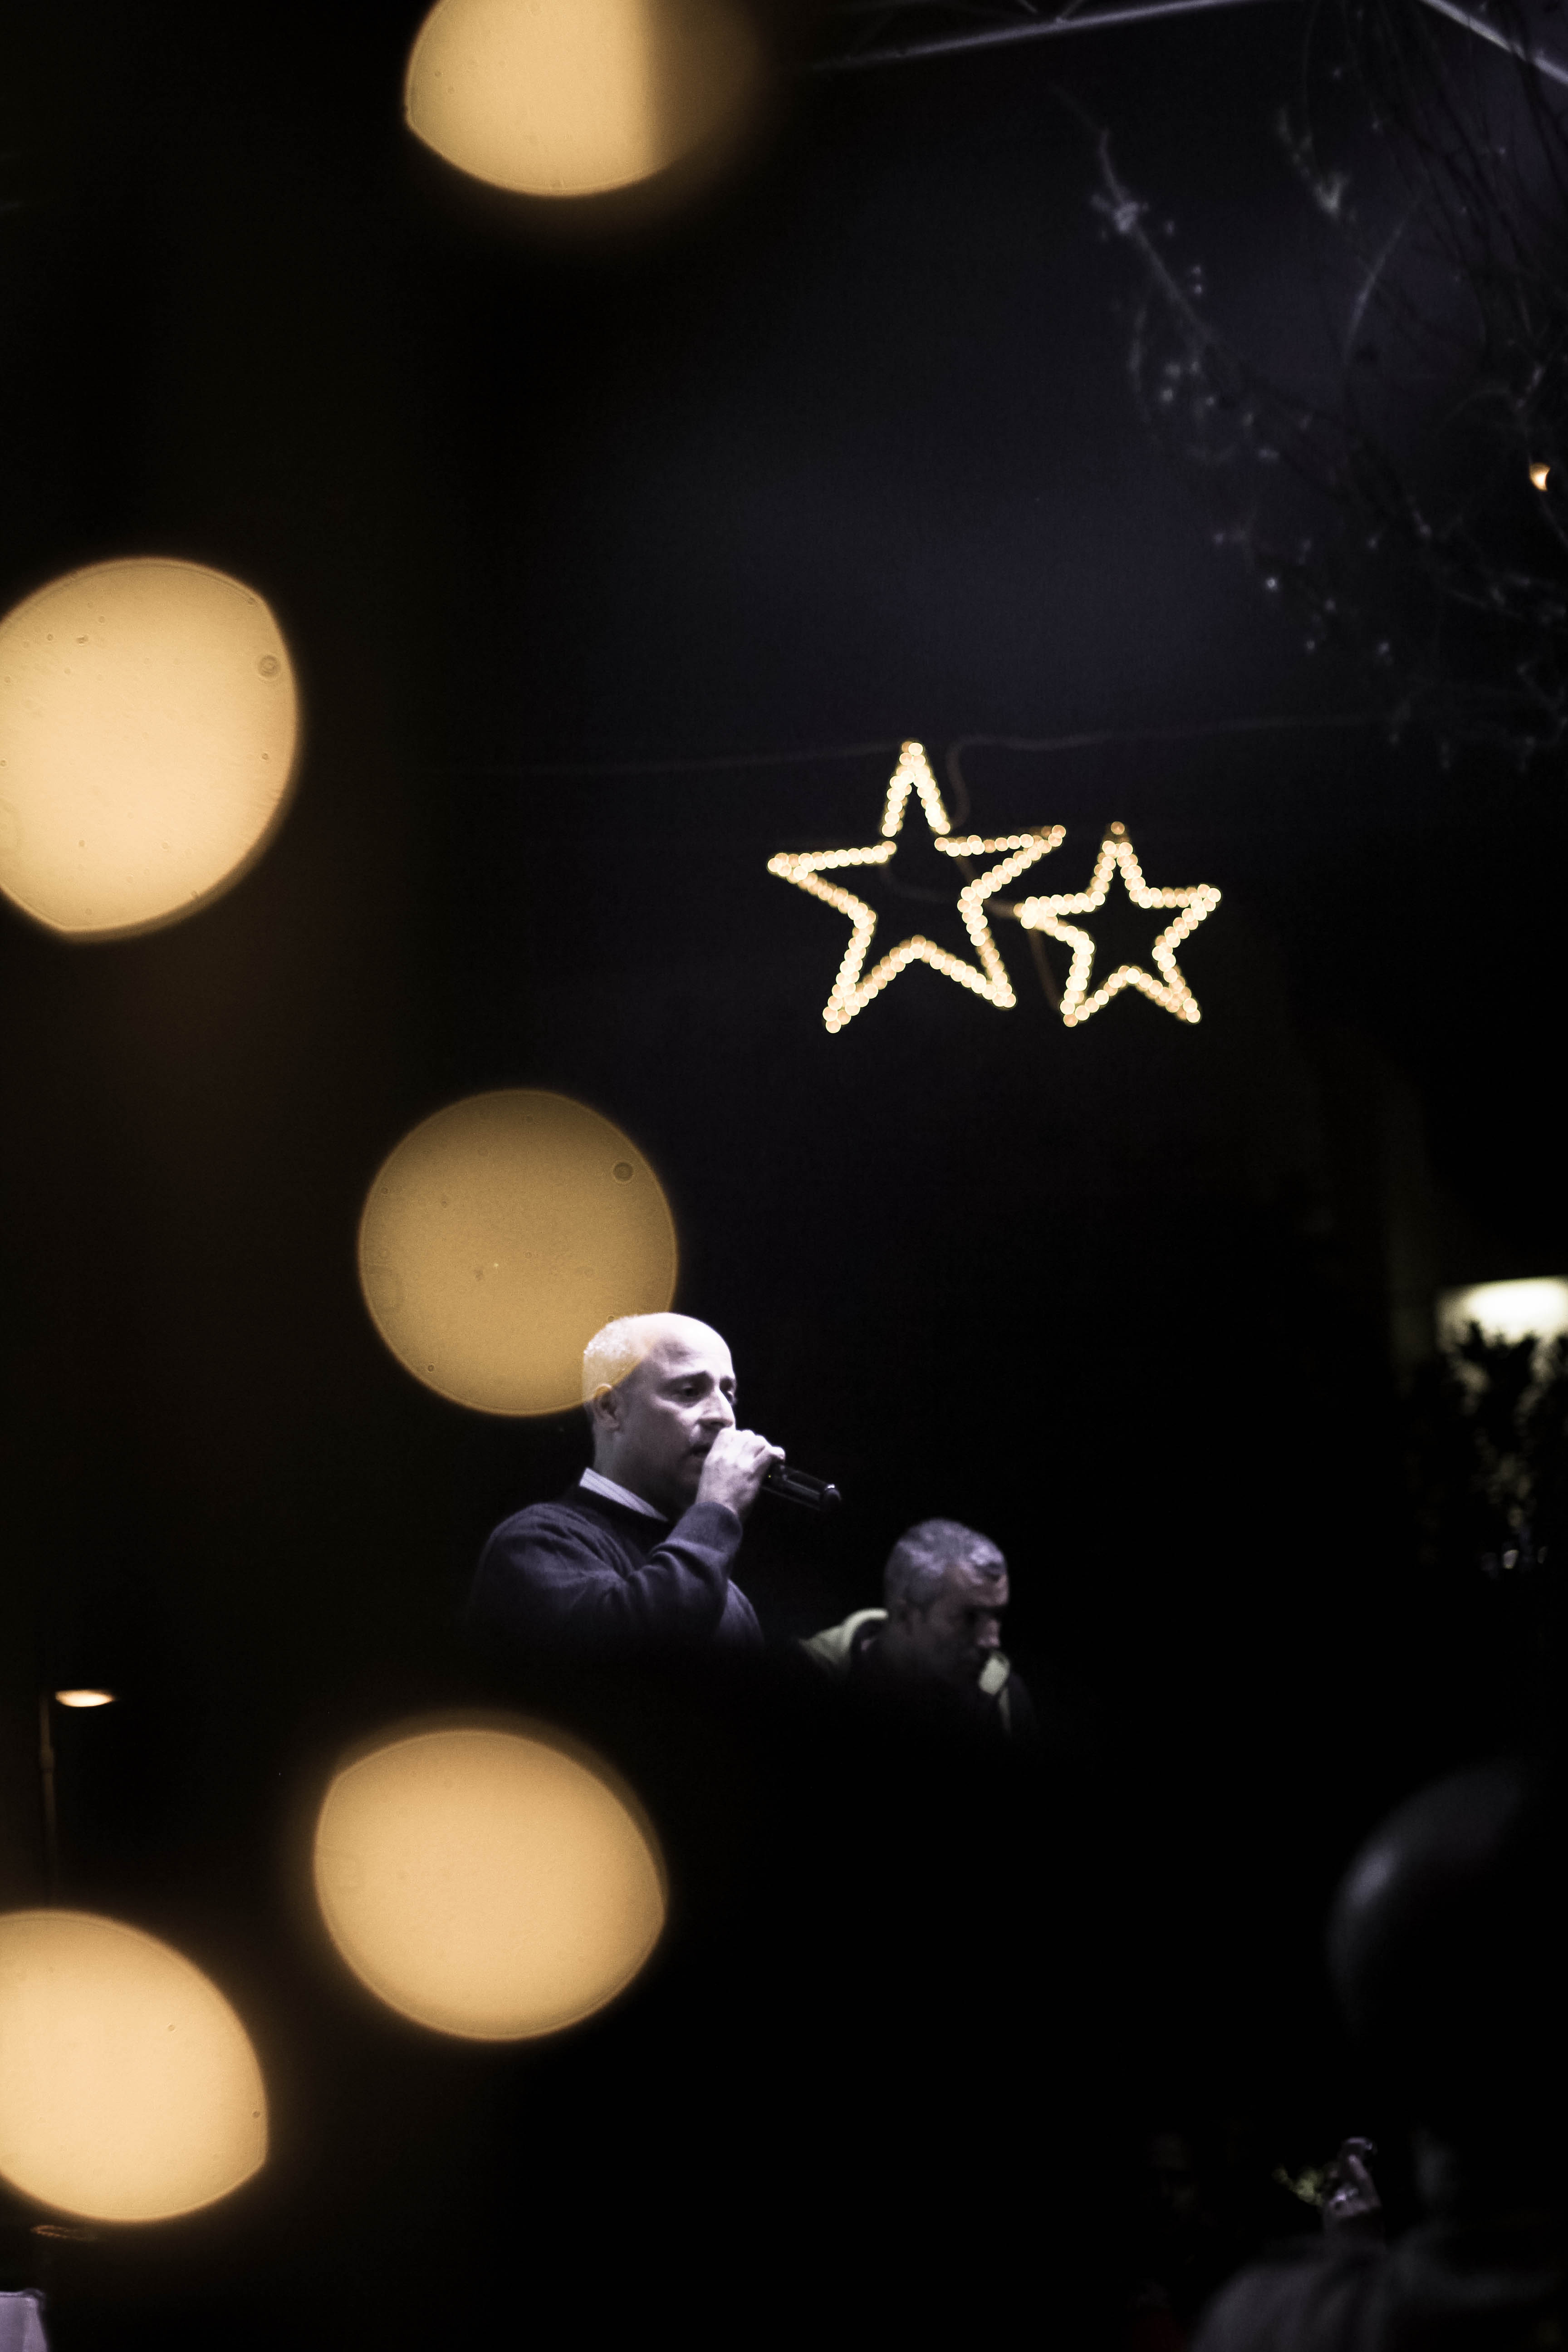 David Hodali singing during the Christmas tree lighting